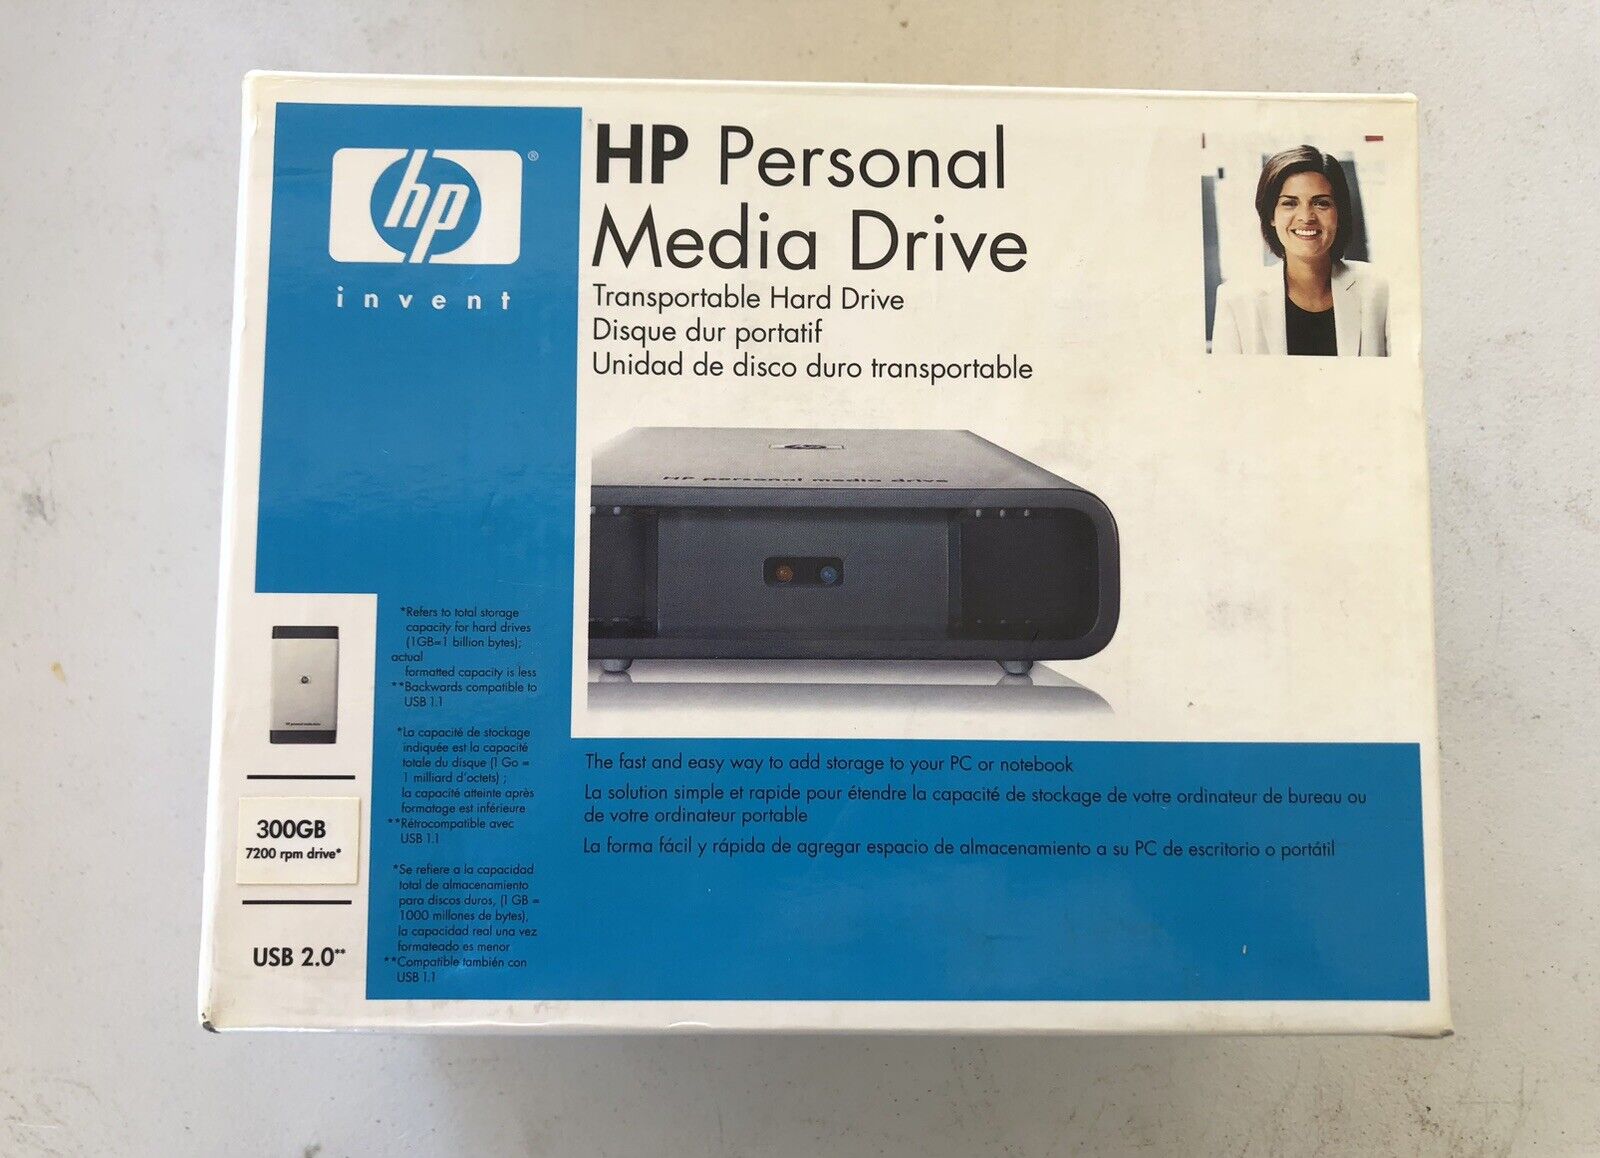 HP Invent Personal Media Drive 300 GB USB 2.0 External Hard Drive - Opened Box